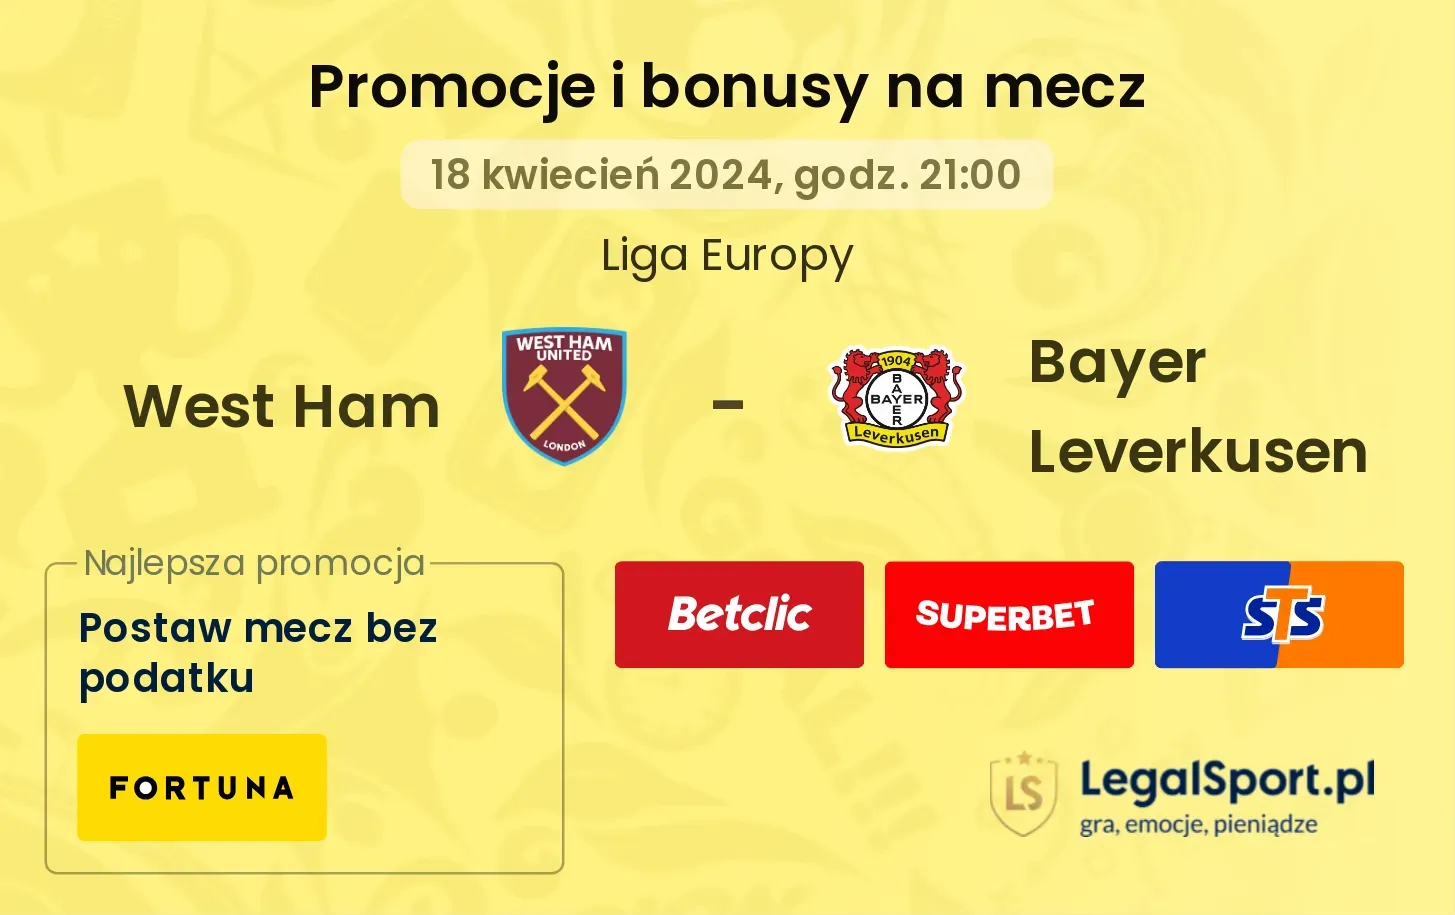 West Ham - Bayer Leverkusen promocje bonusy na mecz